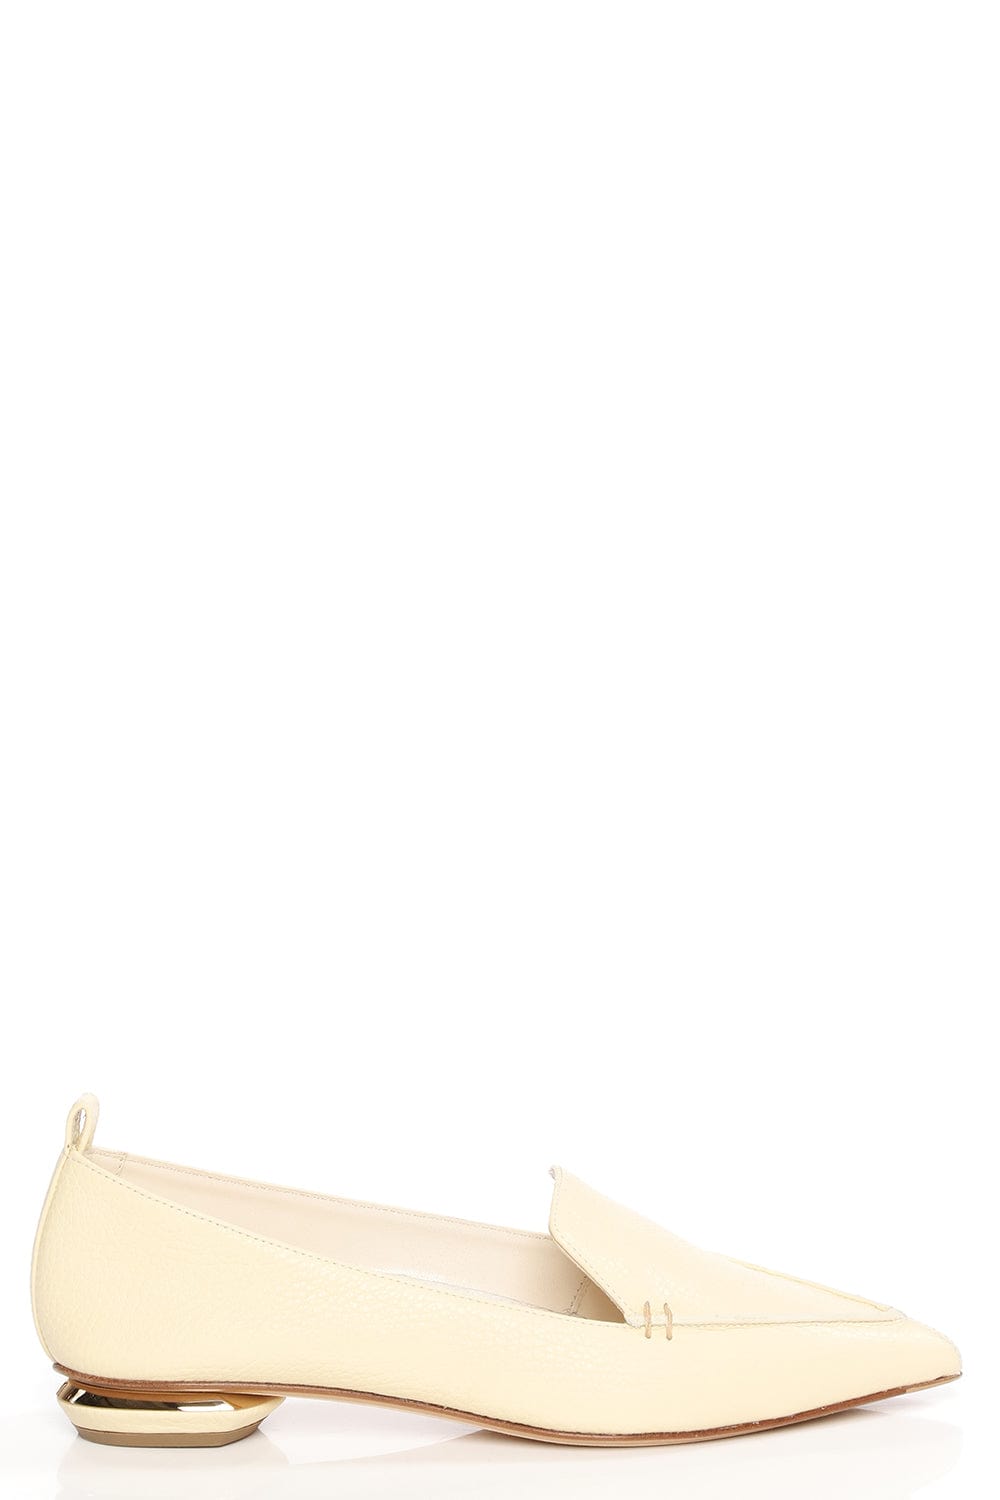 Nicholas Kirkwood Gold Leather Loafers It 36 | 6